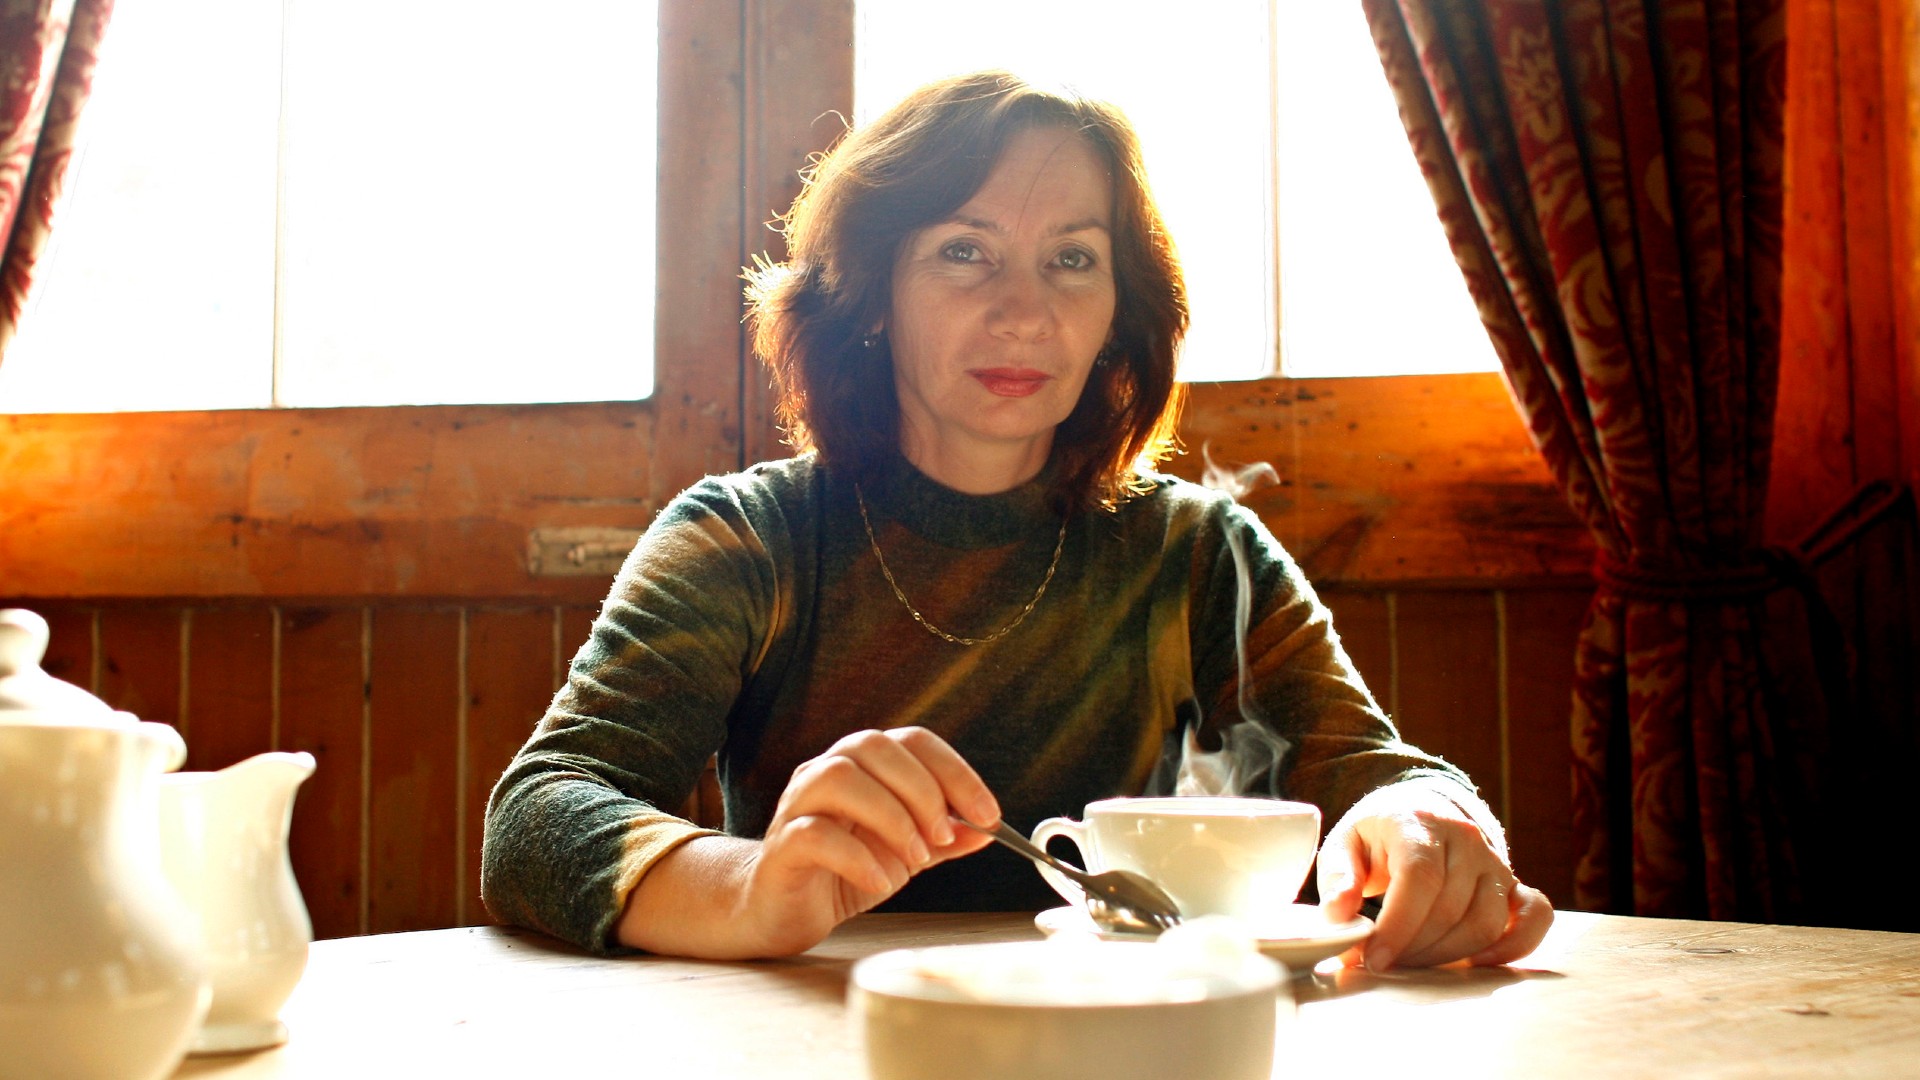 Natalia Estemirova was abducted and shot in Grozny in 2009